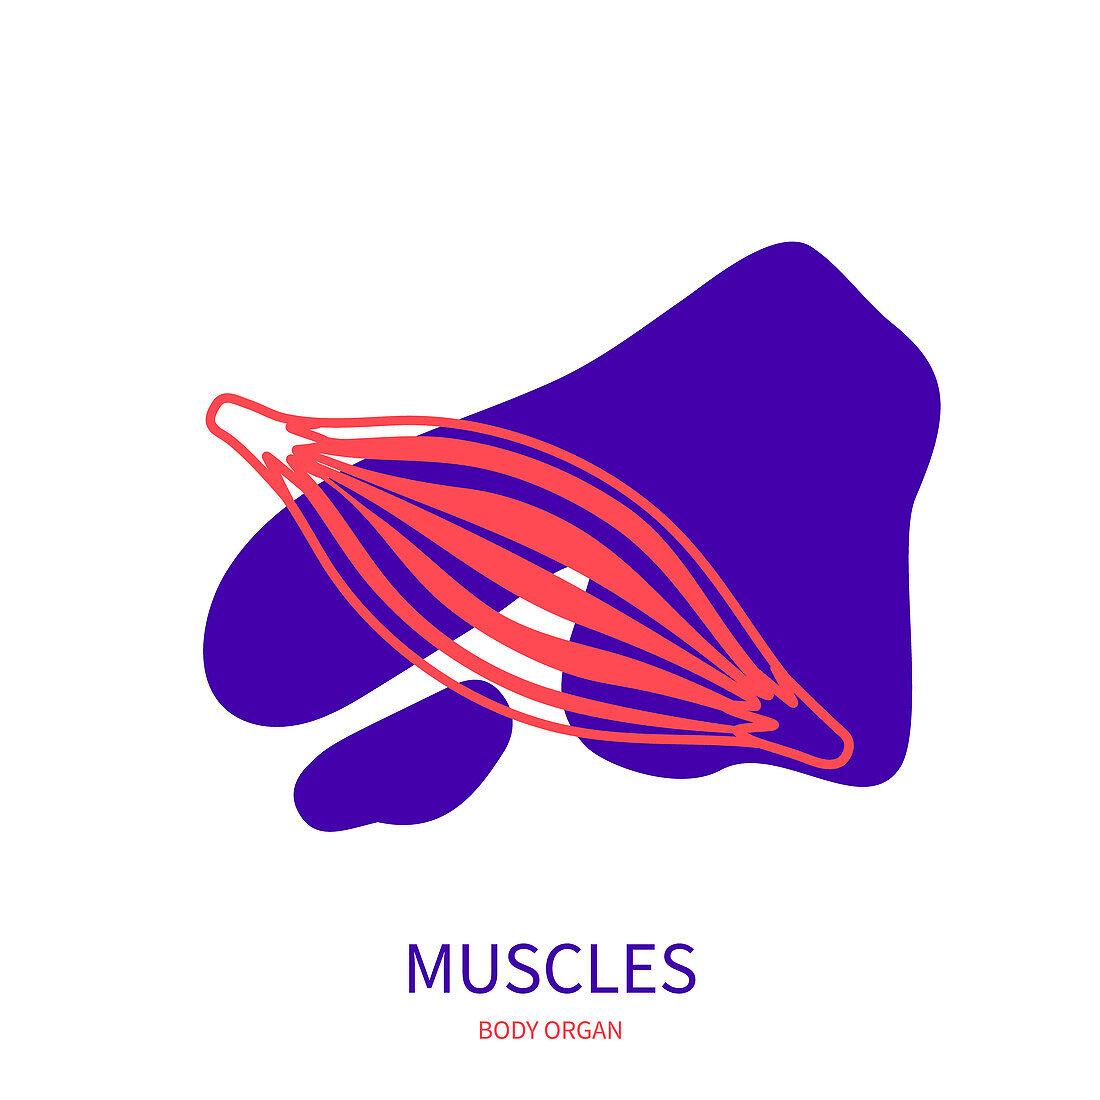 Muscles, conceptual illustration